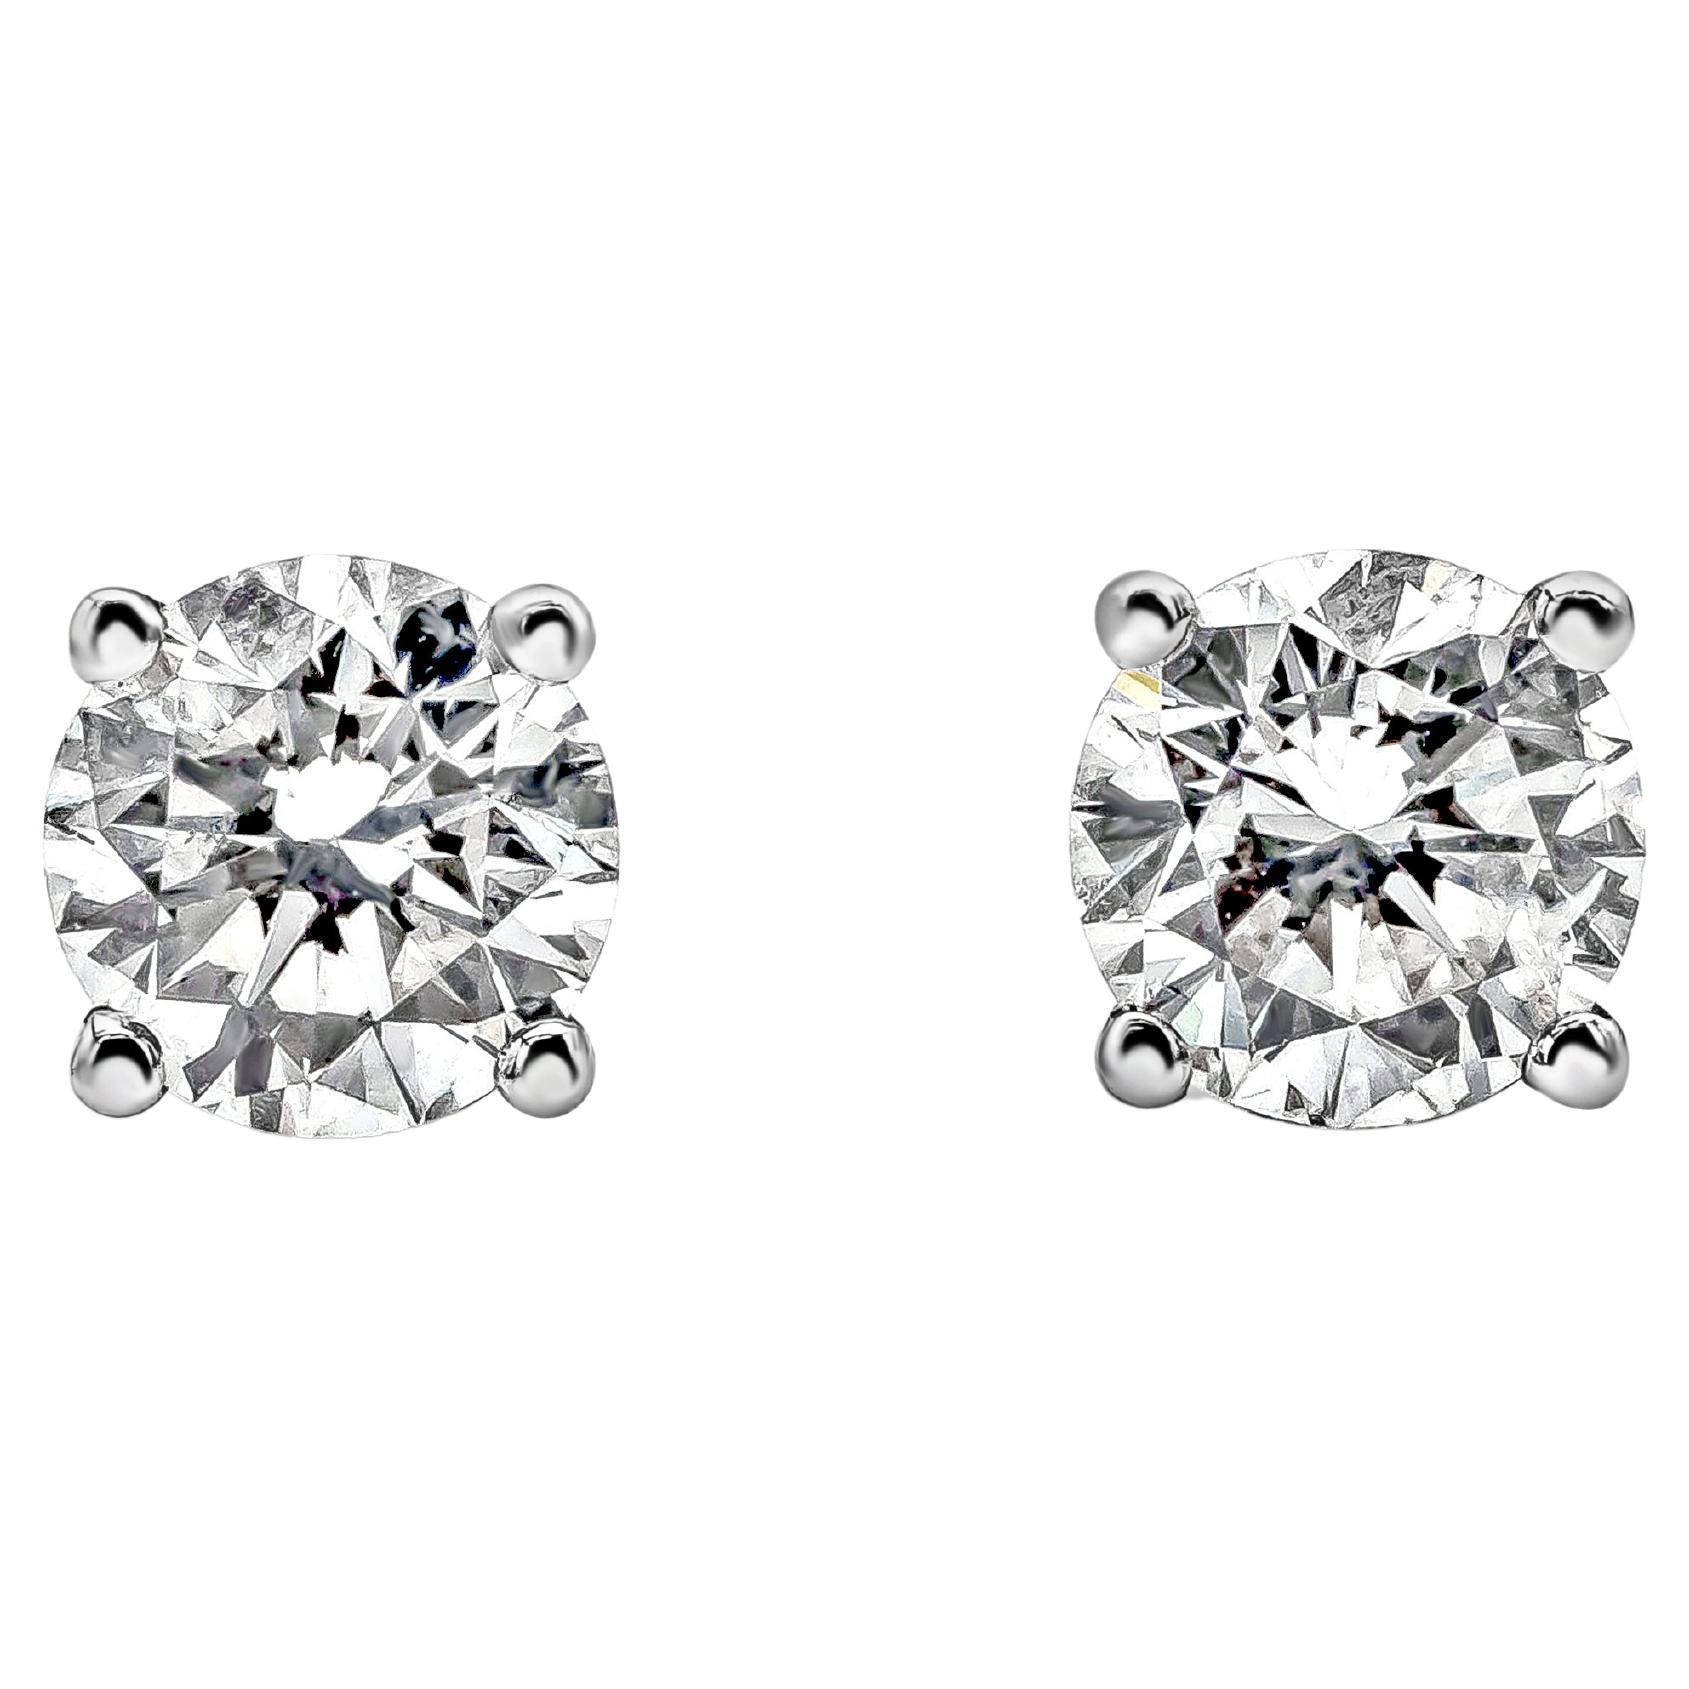 Roman Malakov 1.02 Carat Total Round Diamond Stud Earrings in White Gold For Sale